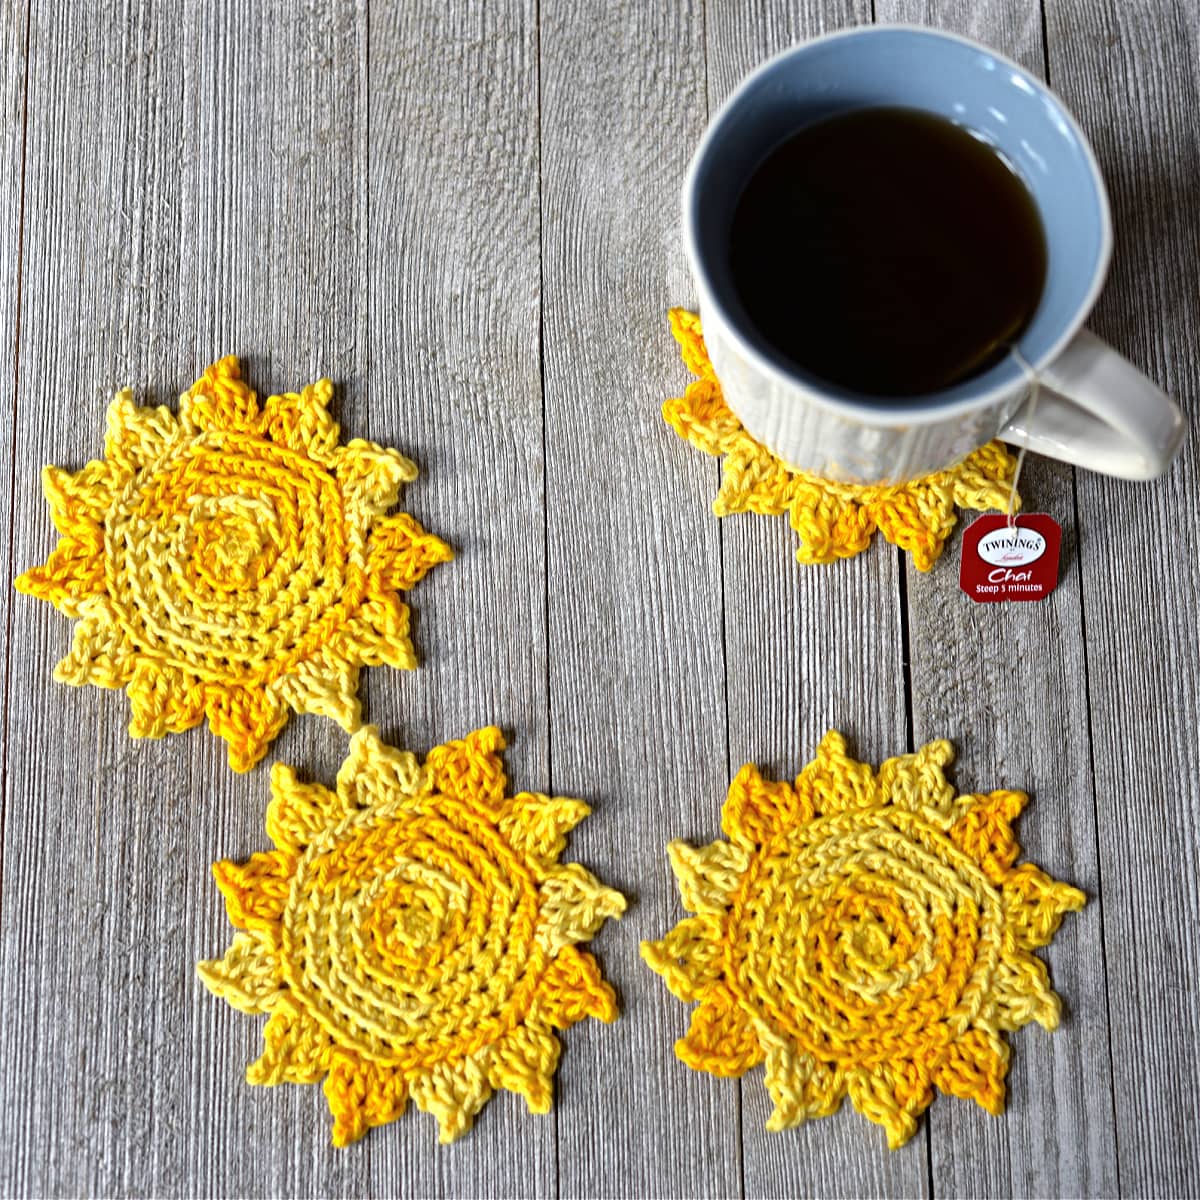 Four yellow sun shaped crochet coasters with coffee mug.